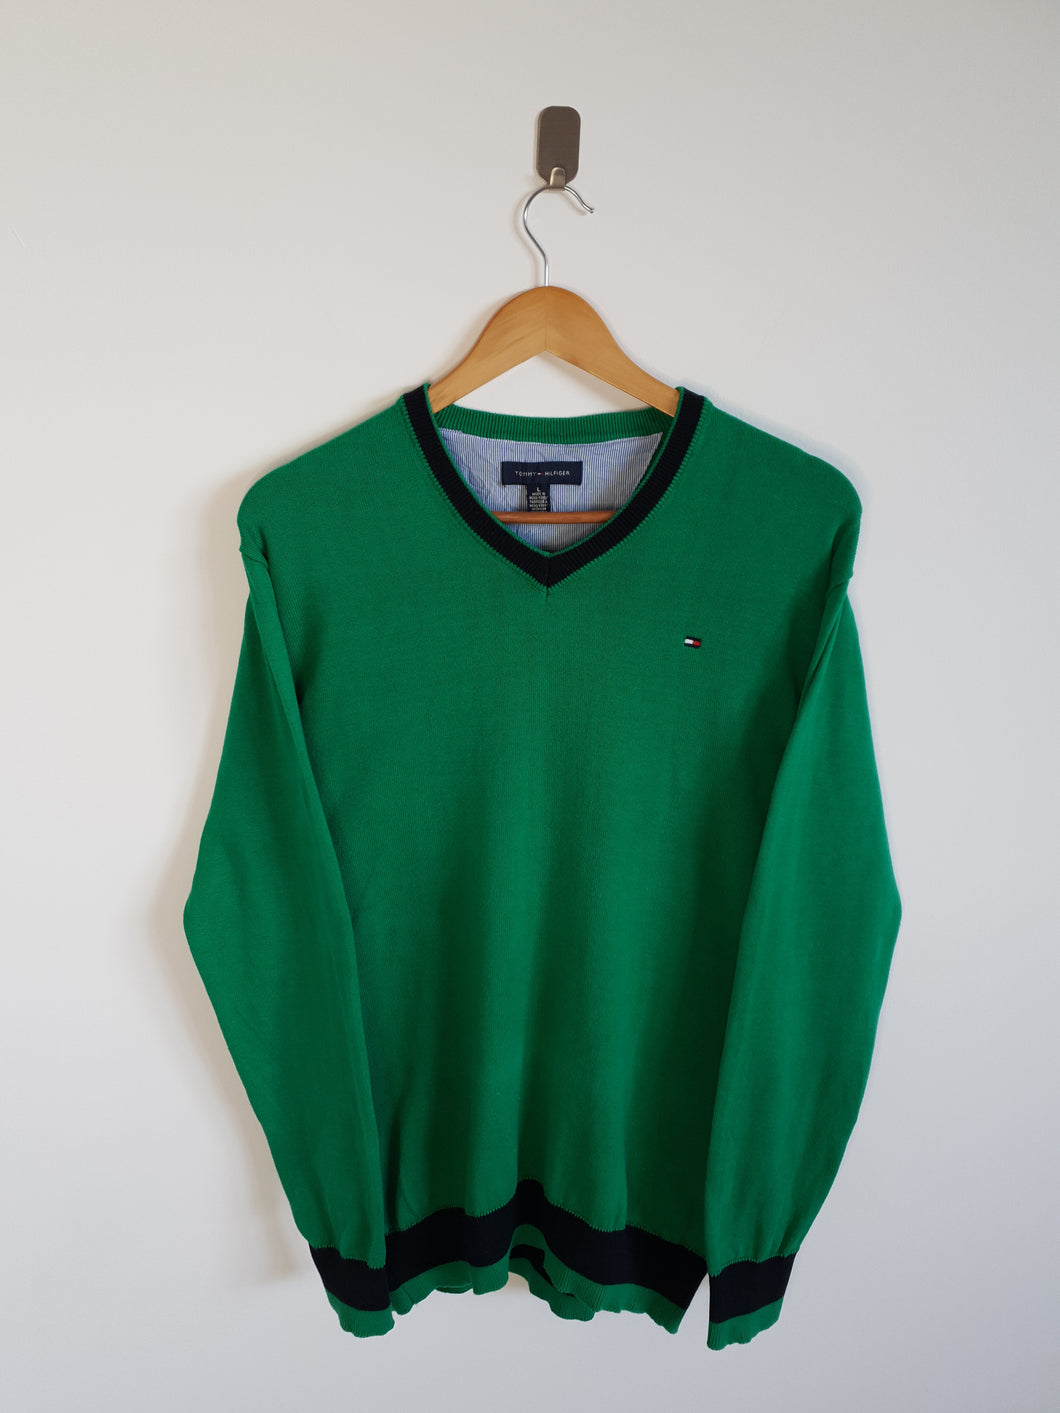 Tommy Hilfiger Green Sweatshirt - L